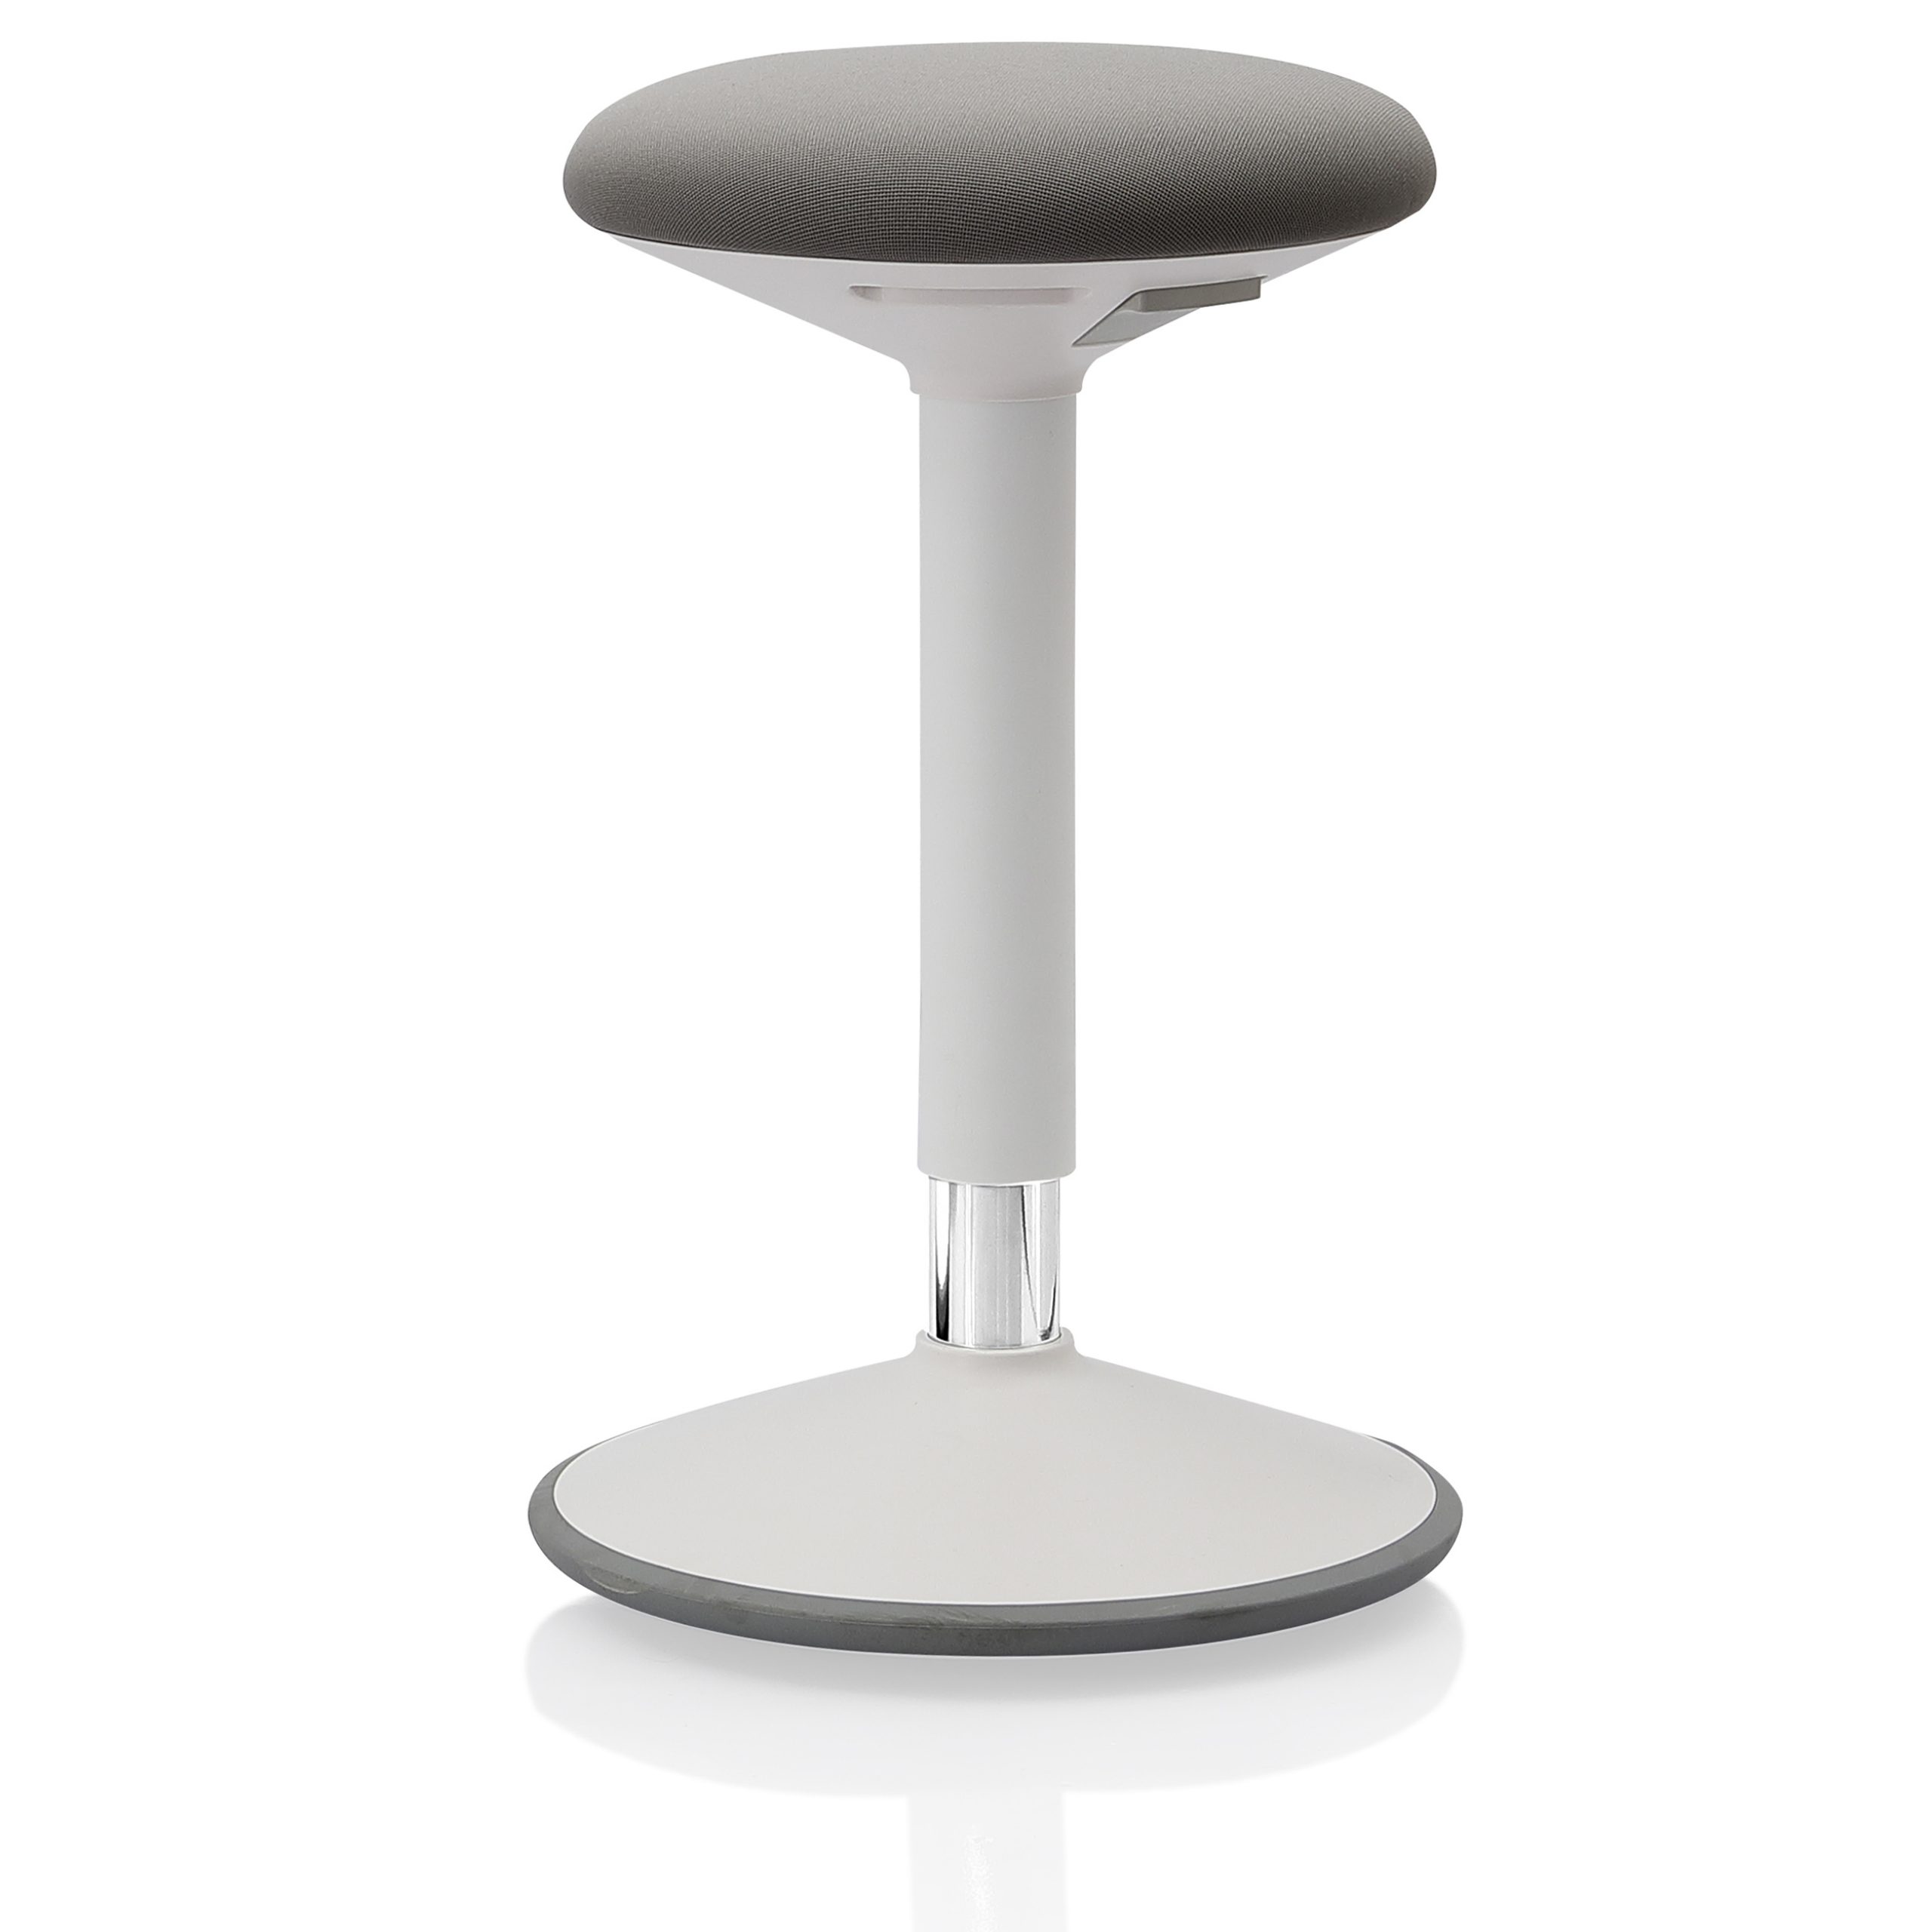 Wobble Stool By Navodesk, Ergonomic Stool, Active Chair, Standing desk stool